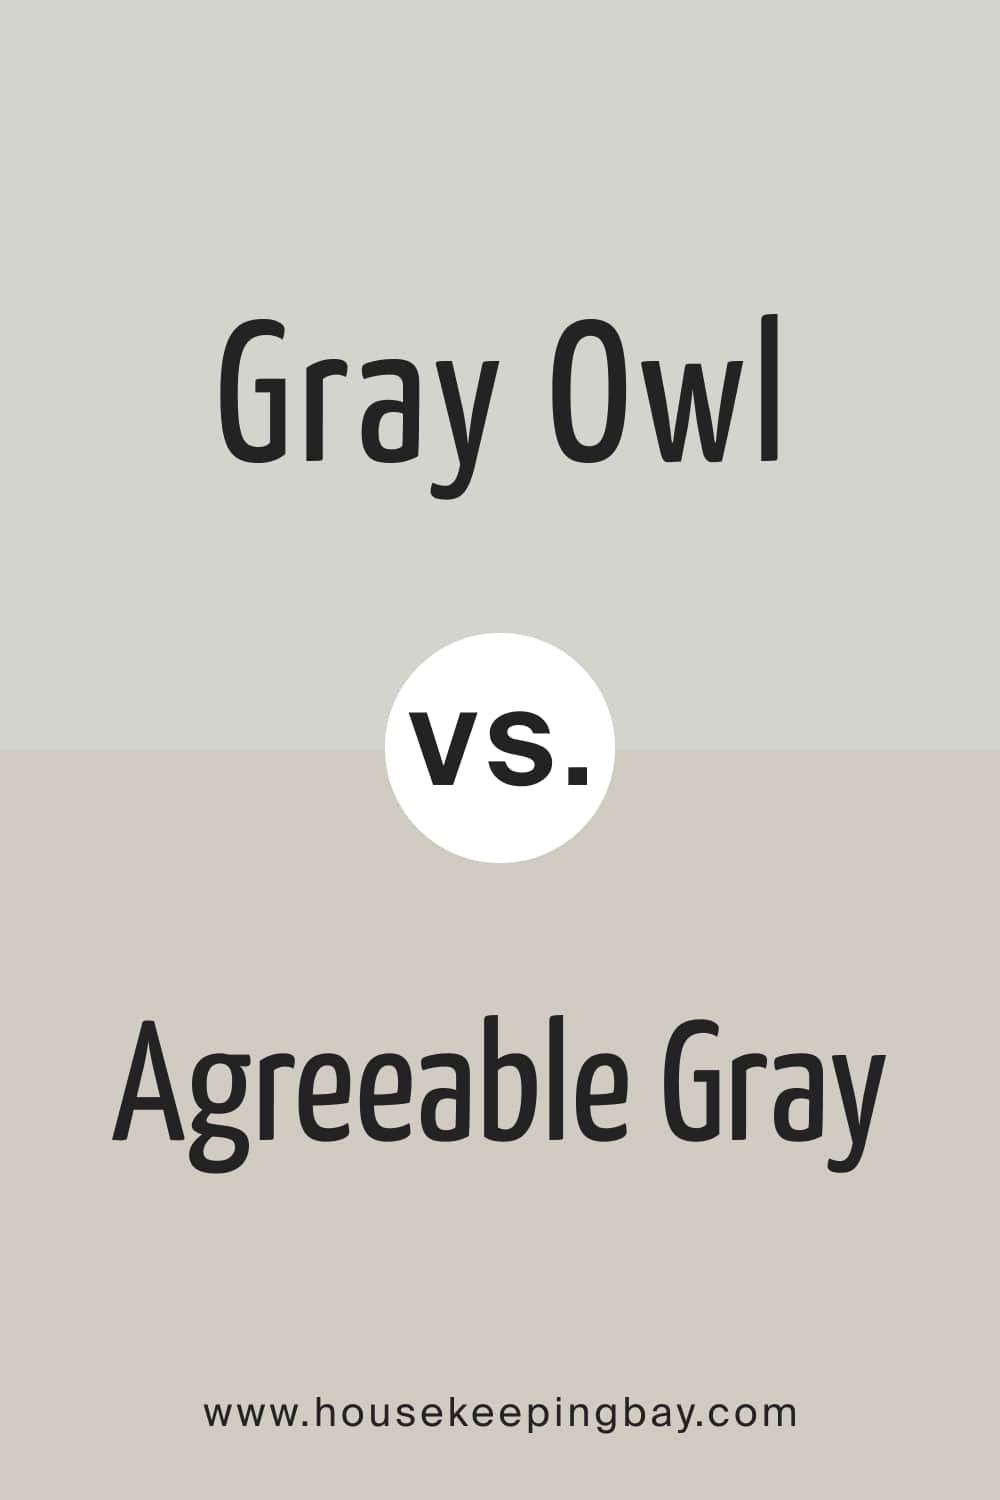 Gray Owl vs. Agreeable Gray